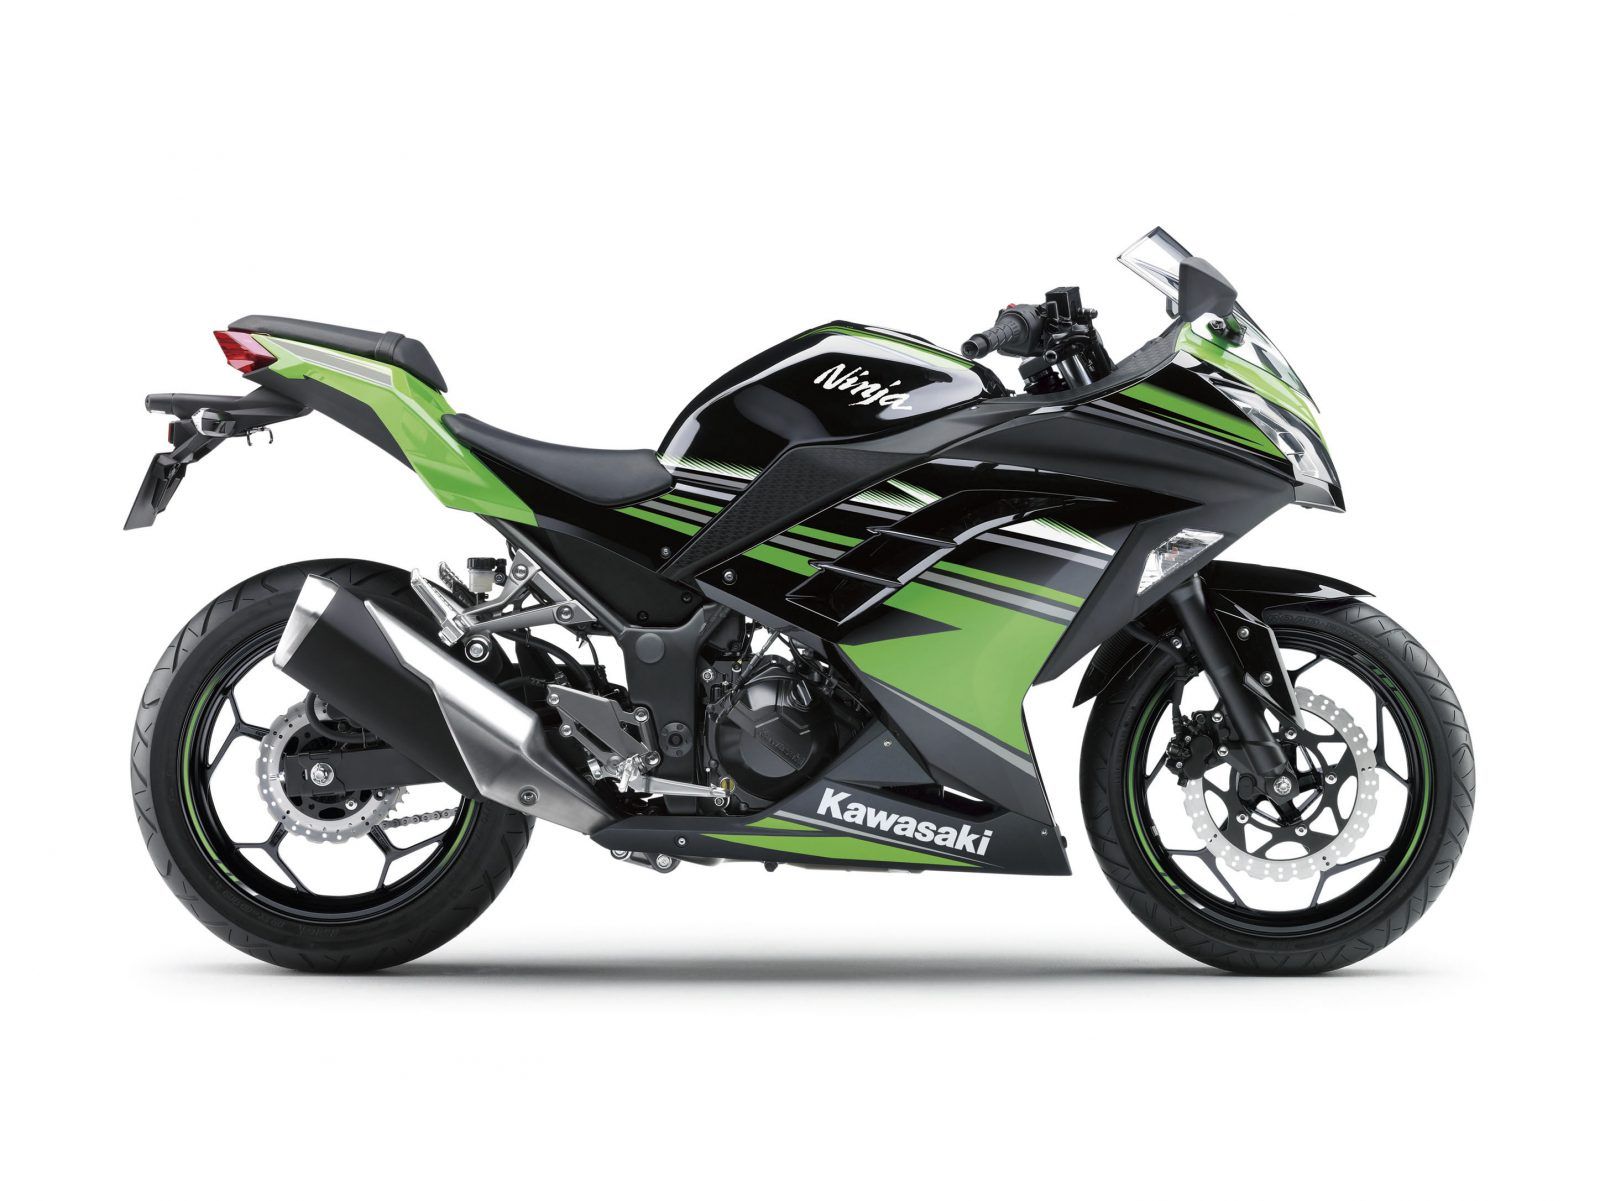 Kawasaki Ninja 300 To Be Heavily Localised In India?